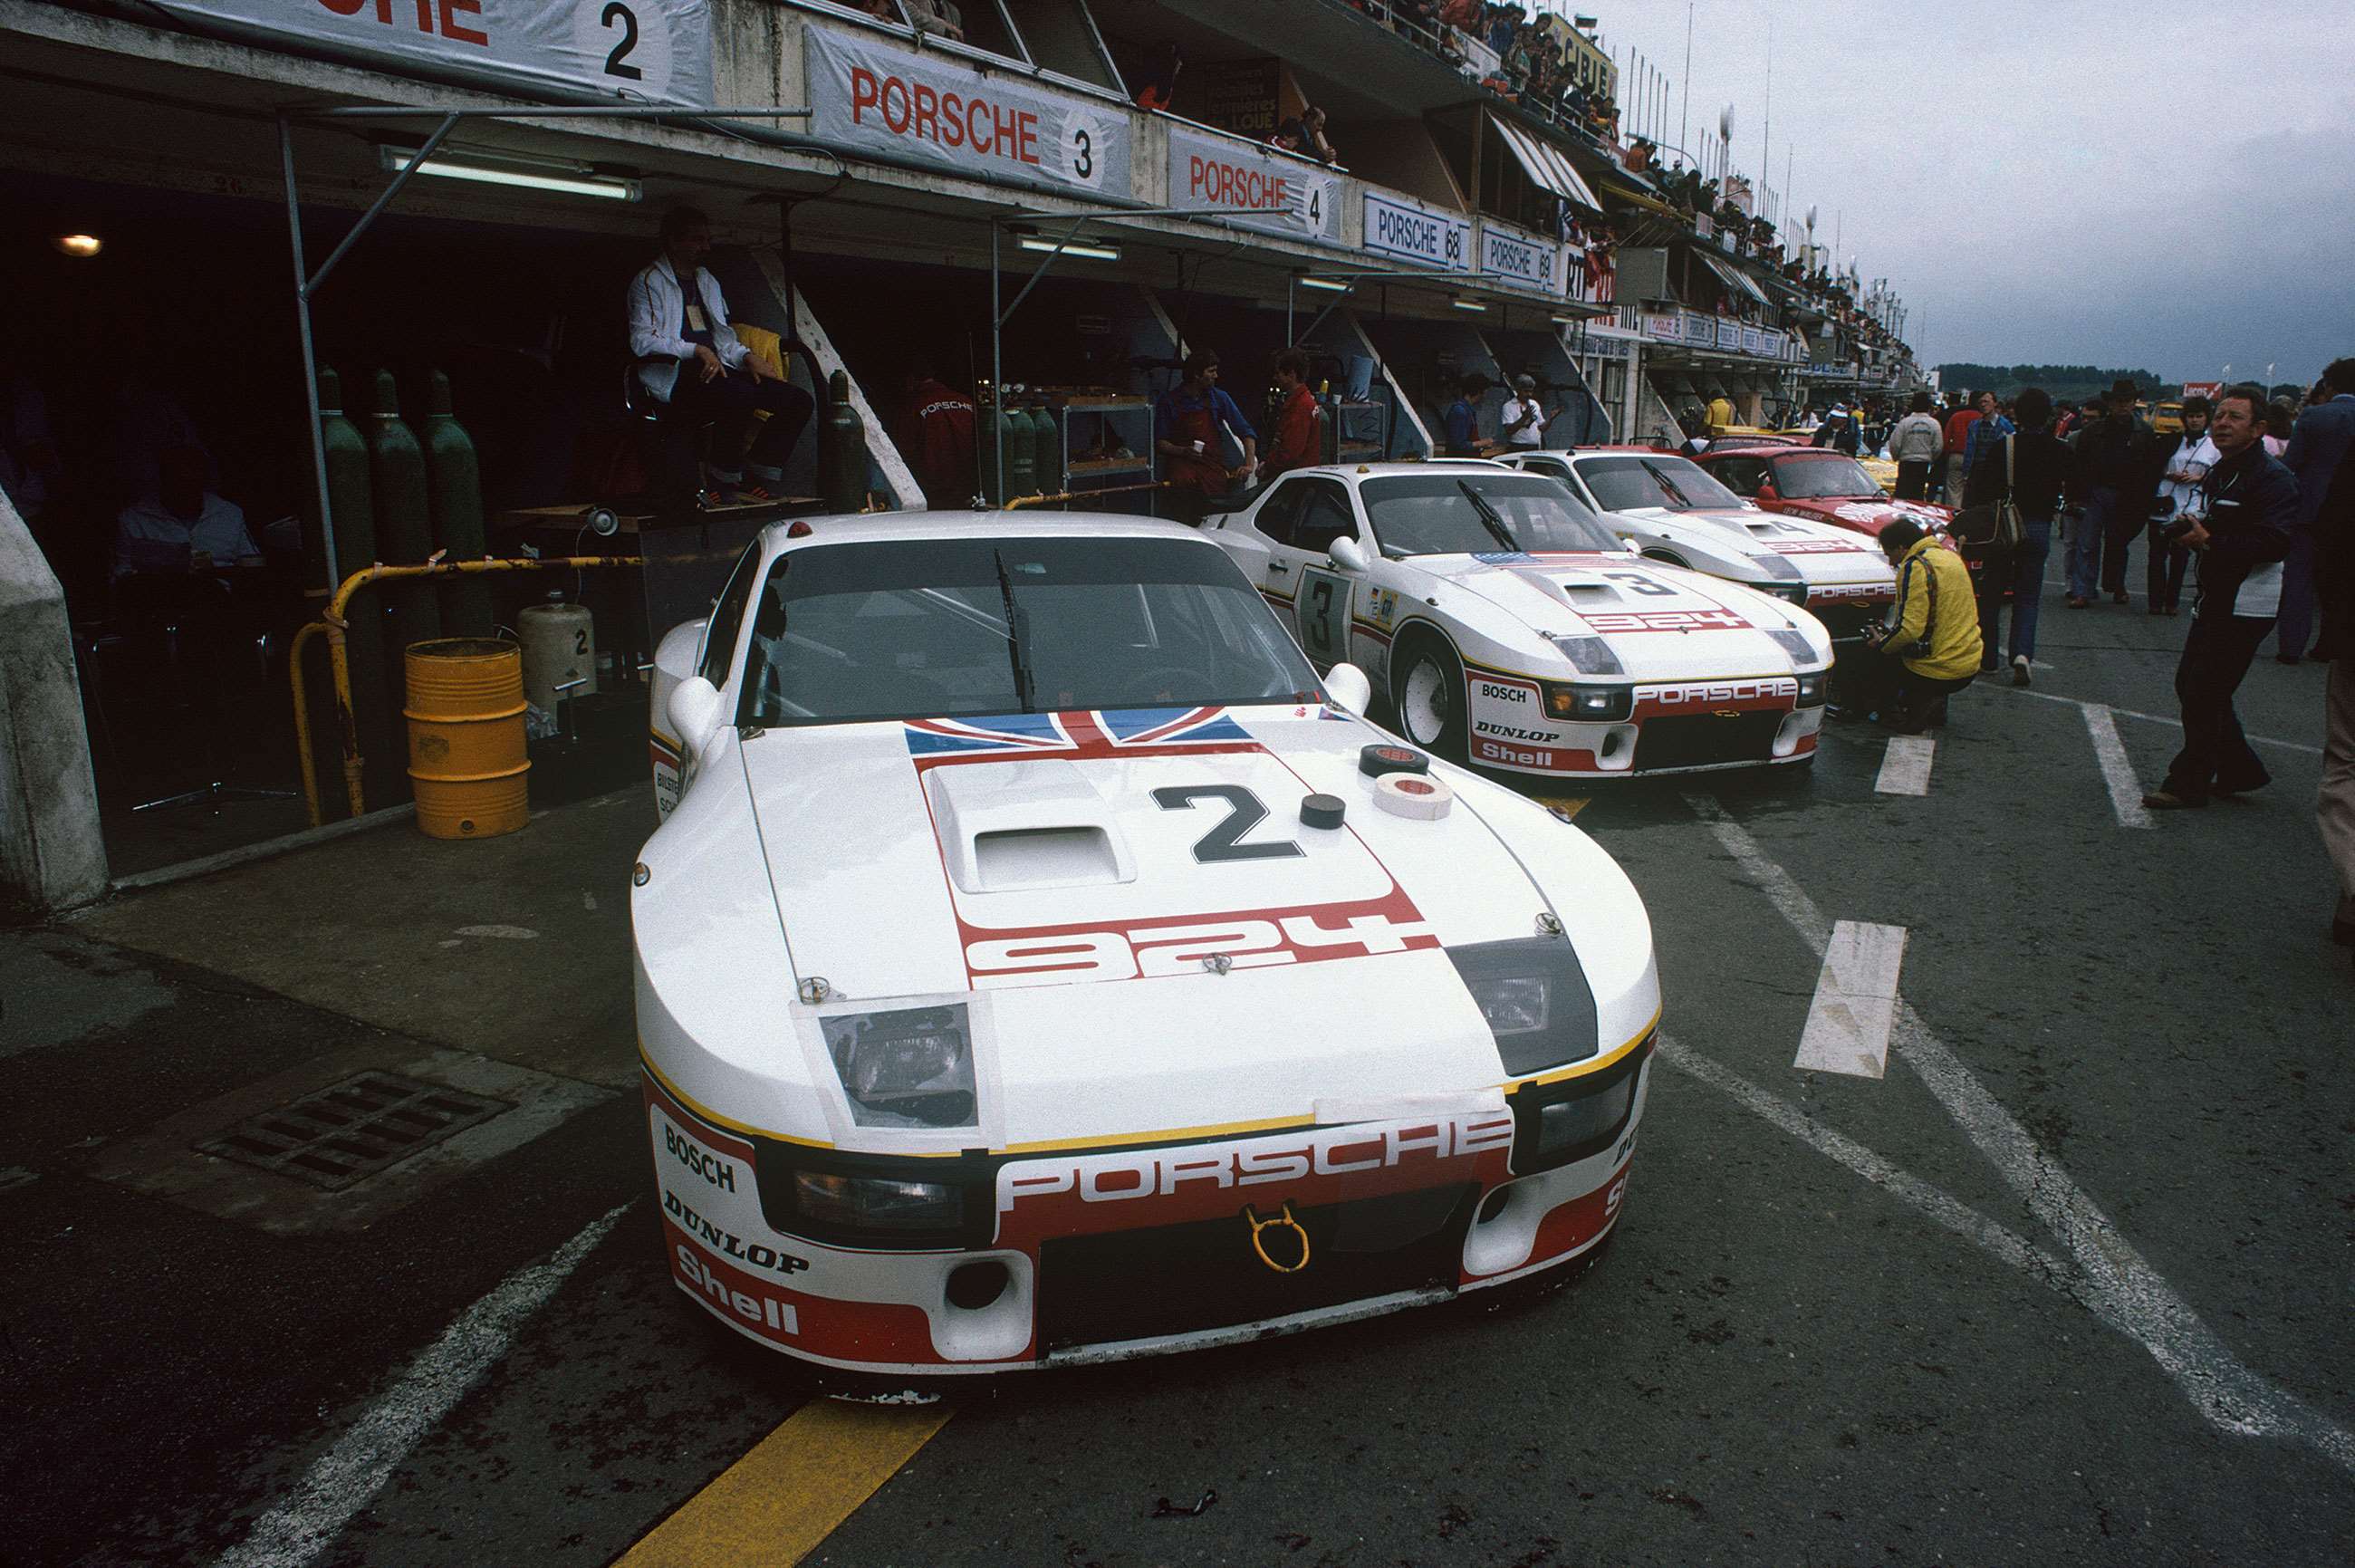 best-racing-porsches-6-porsche-924-gt-turbo-le-mans-1980-lat-mi-goodwood-03072020.jpg